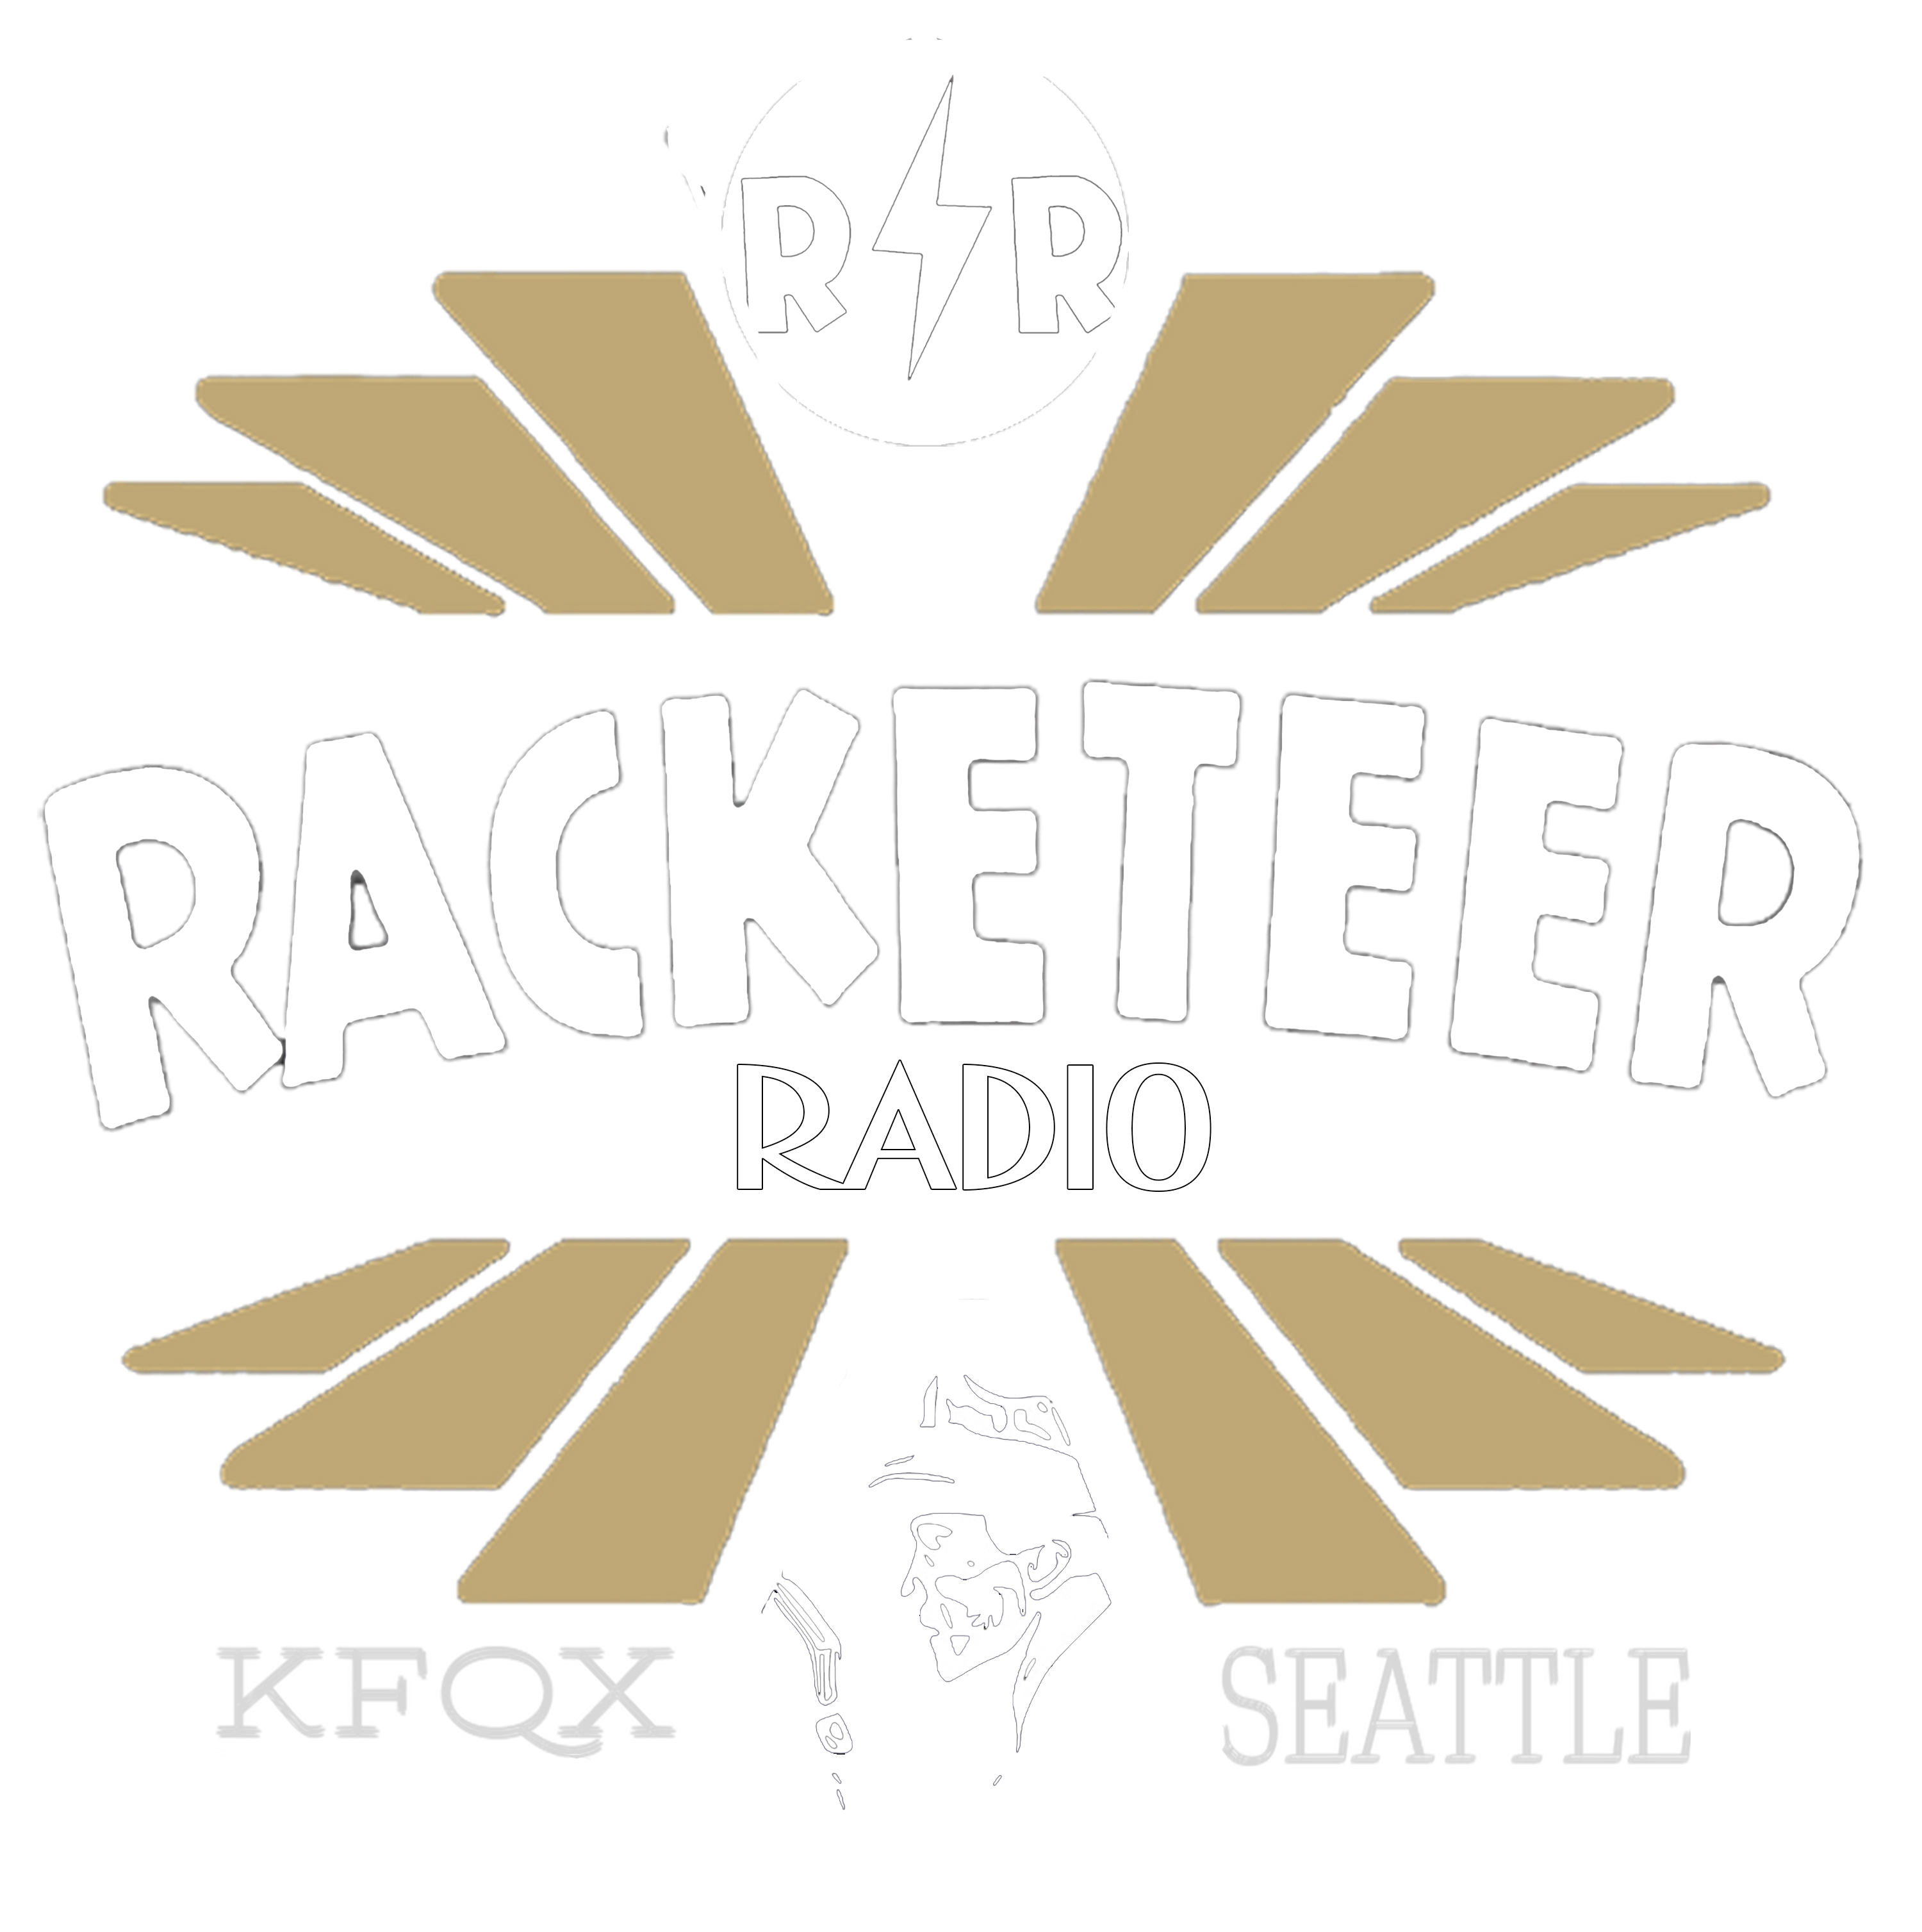 Racketeer Broadcast Association